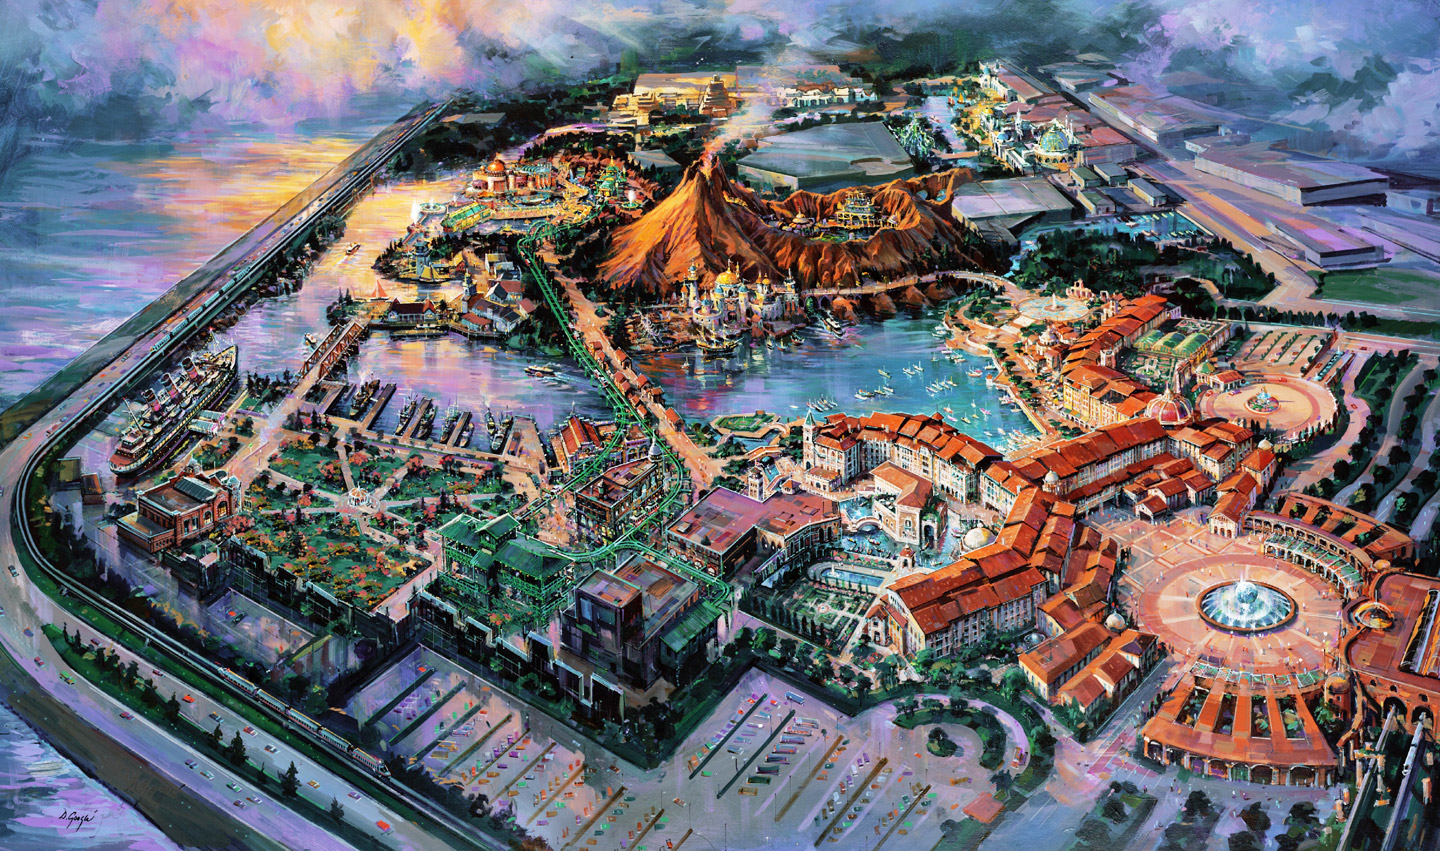 Tokyo DisneySea - Resort Concept